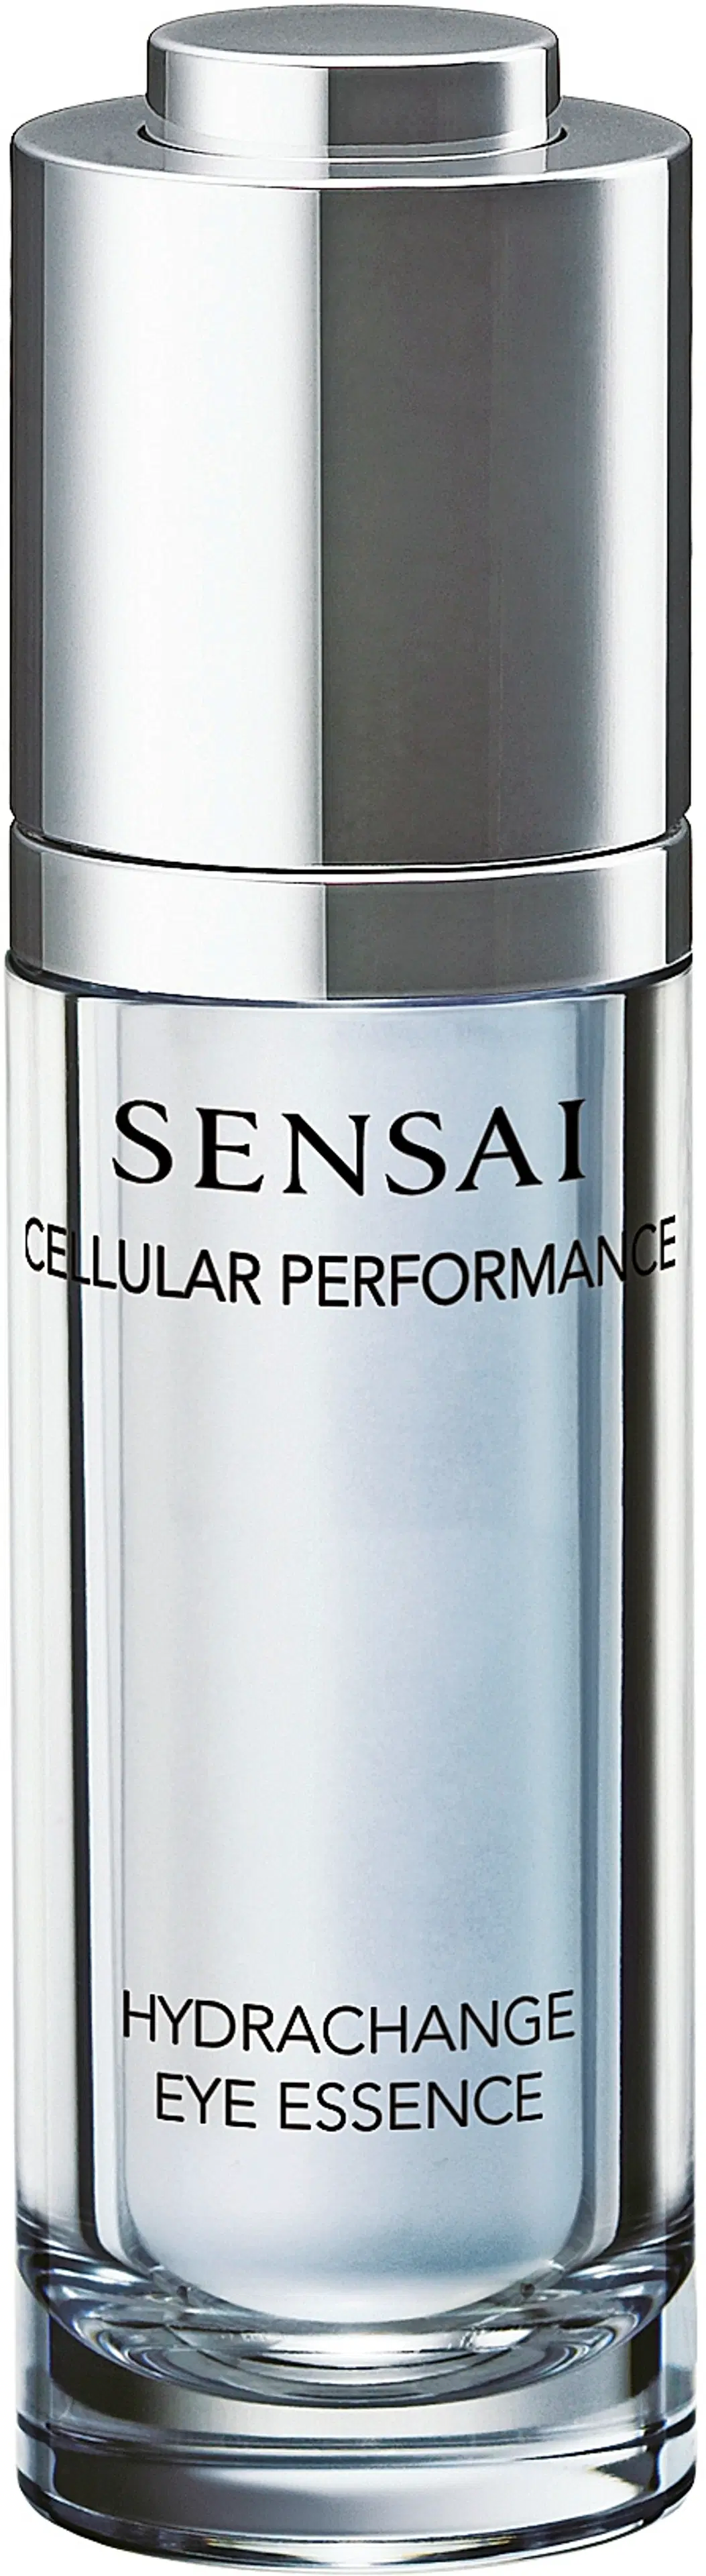 Sensai Cellular Performance Hydrachange Eye Essence silmänympärysseerumi 15 ml